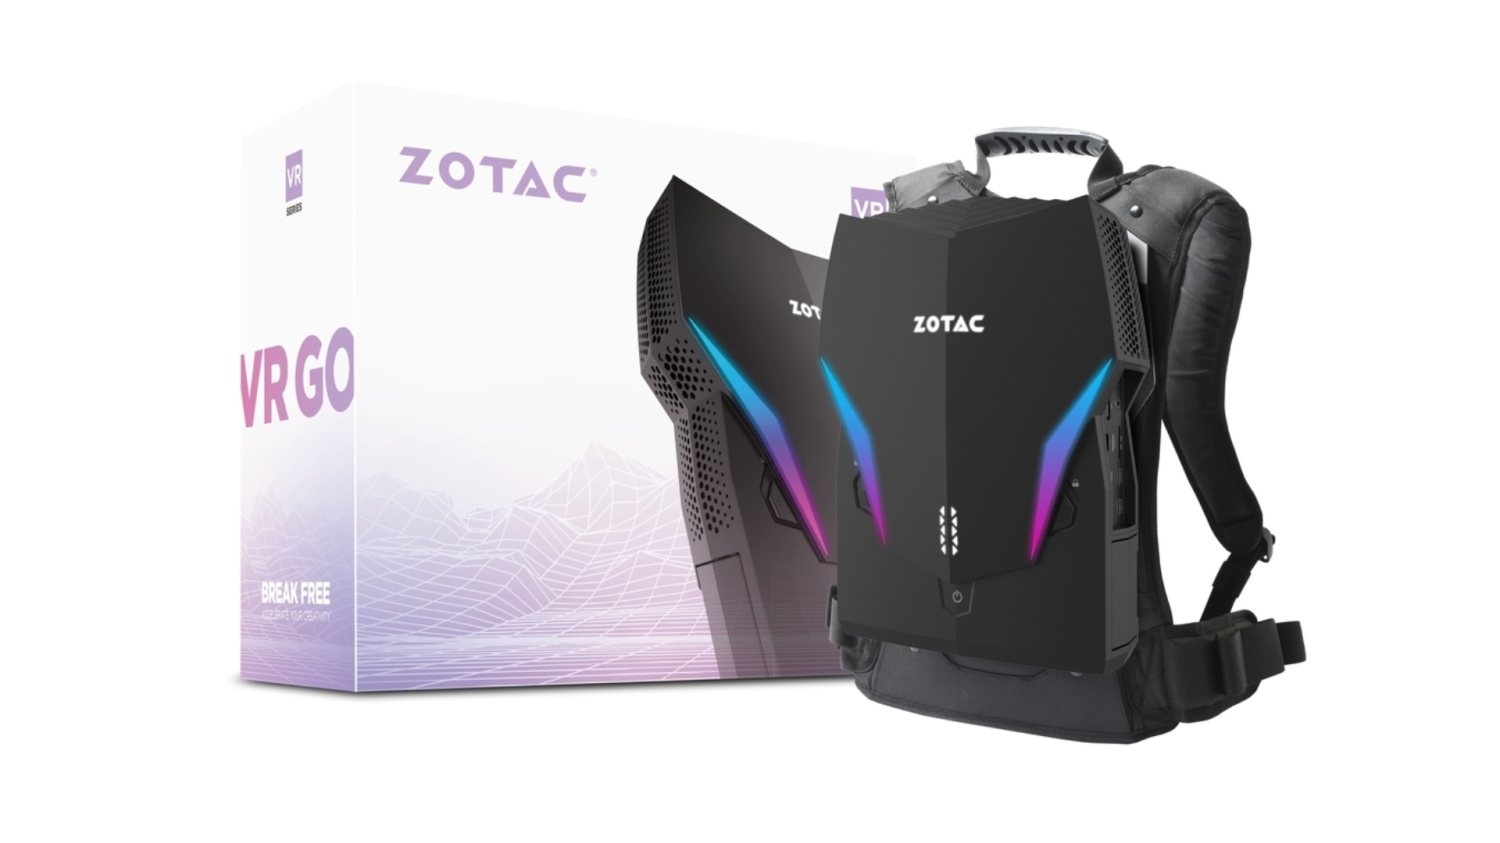 TweakTown Enlarged Image - The new ZOTAC VR GO 4.0 wearable PC, image credit: ZOTAC.